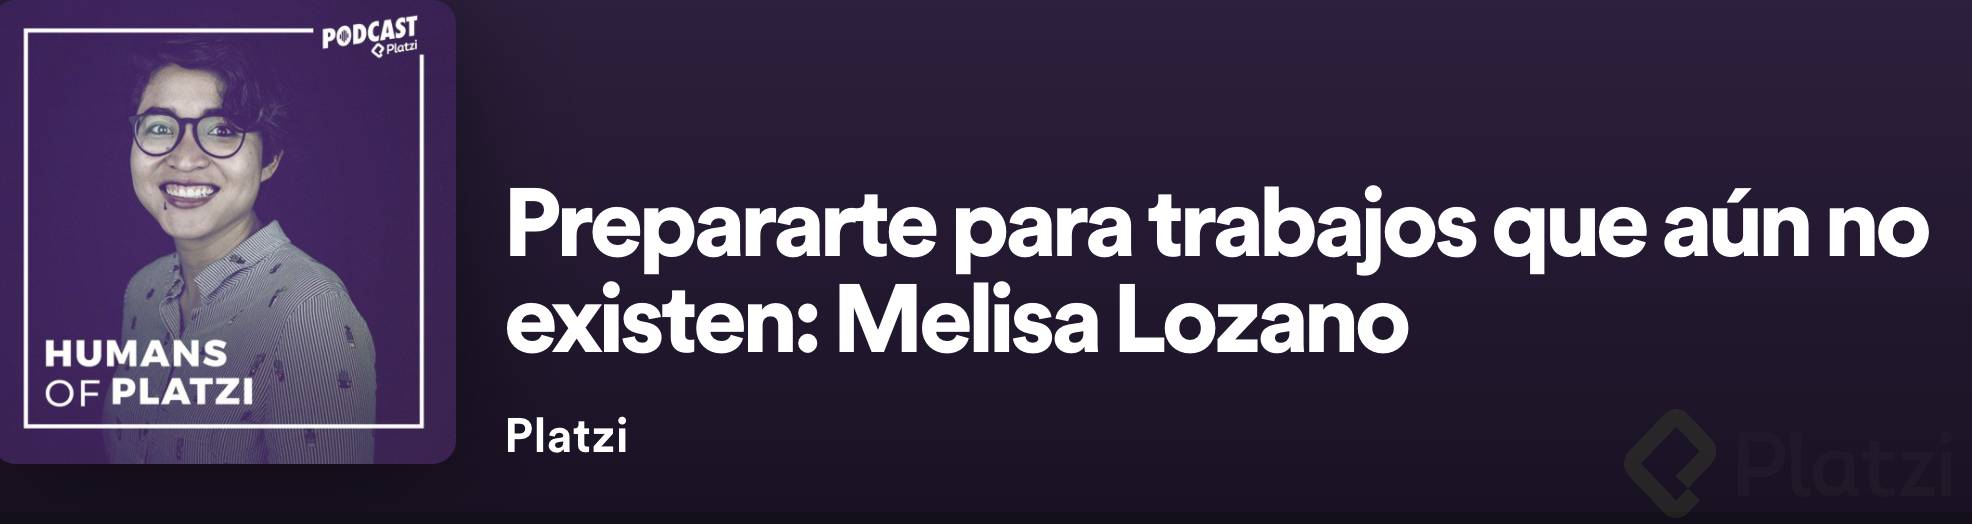 humans-platzi-Melisa-Lozano.png